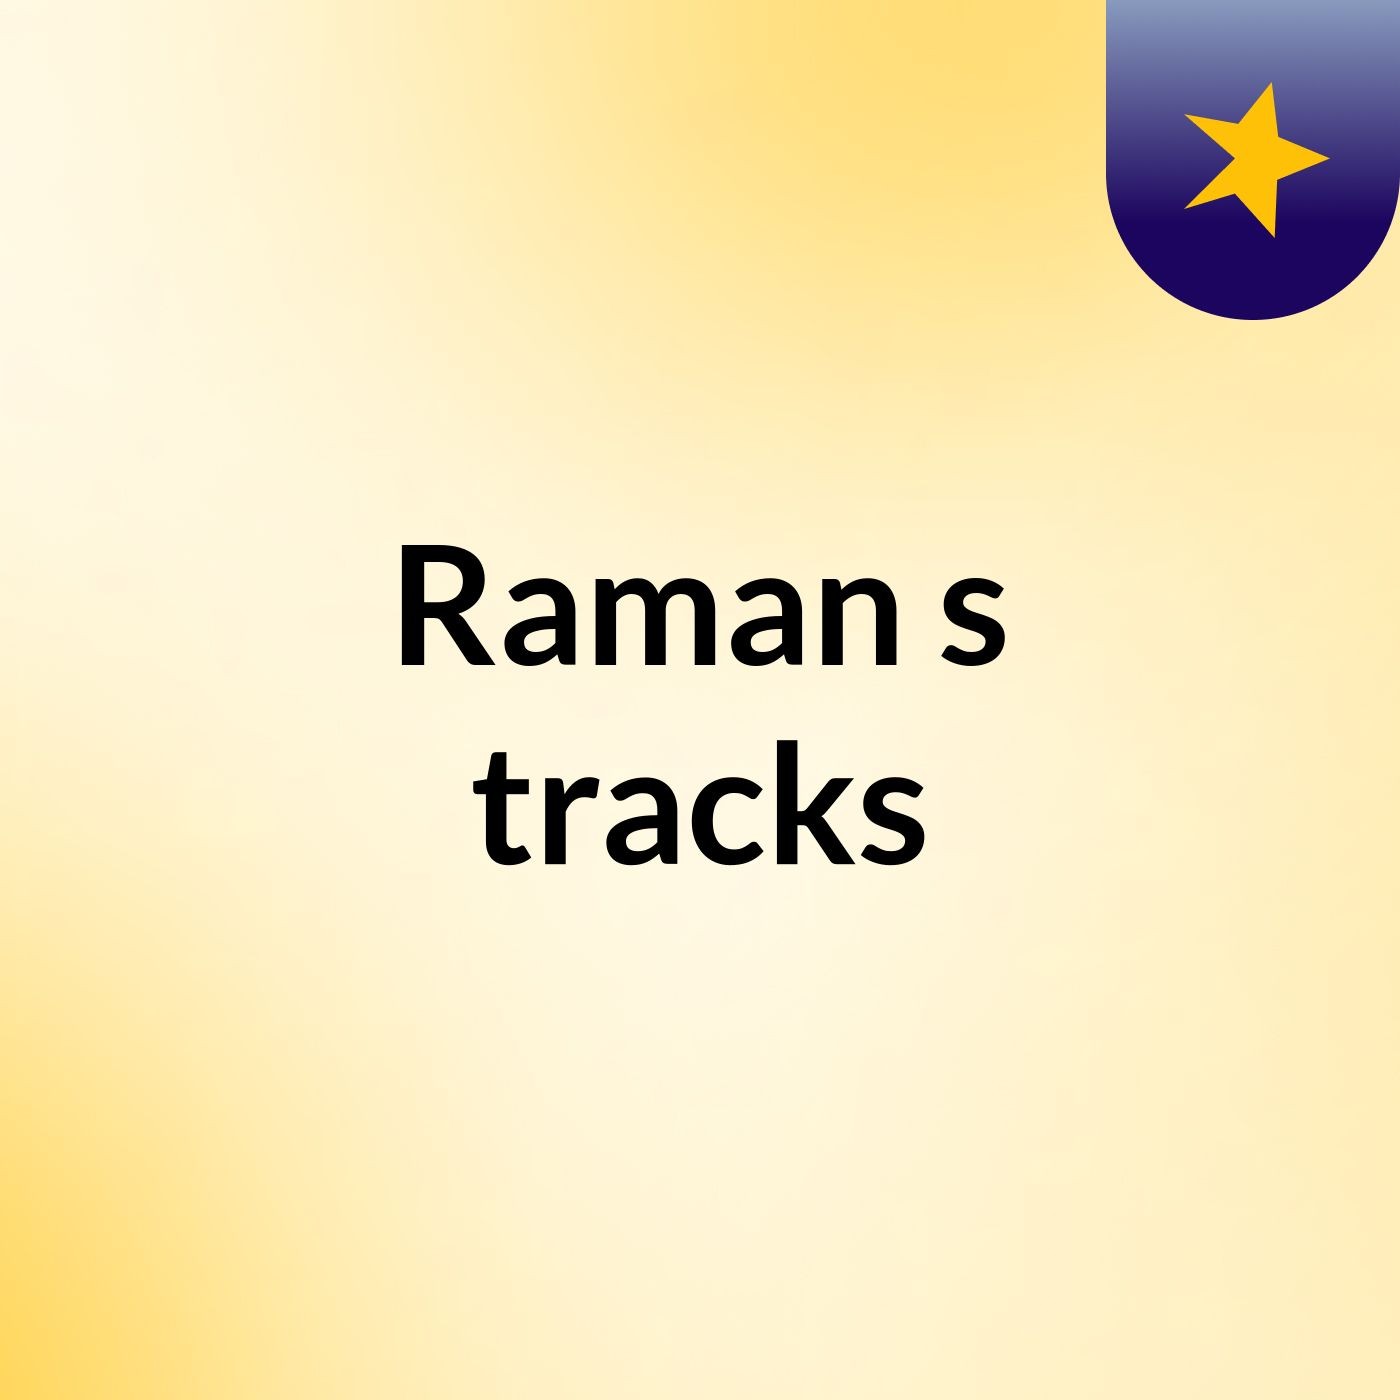 Raman's tracks